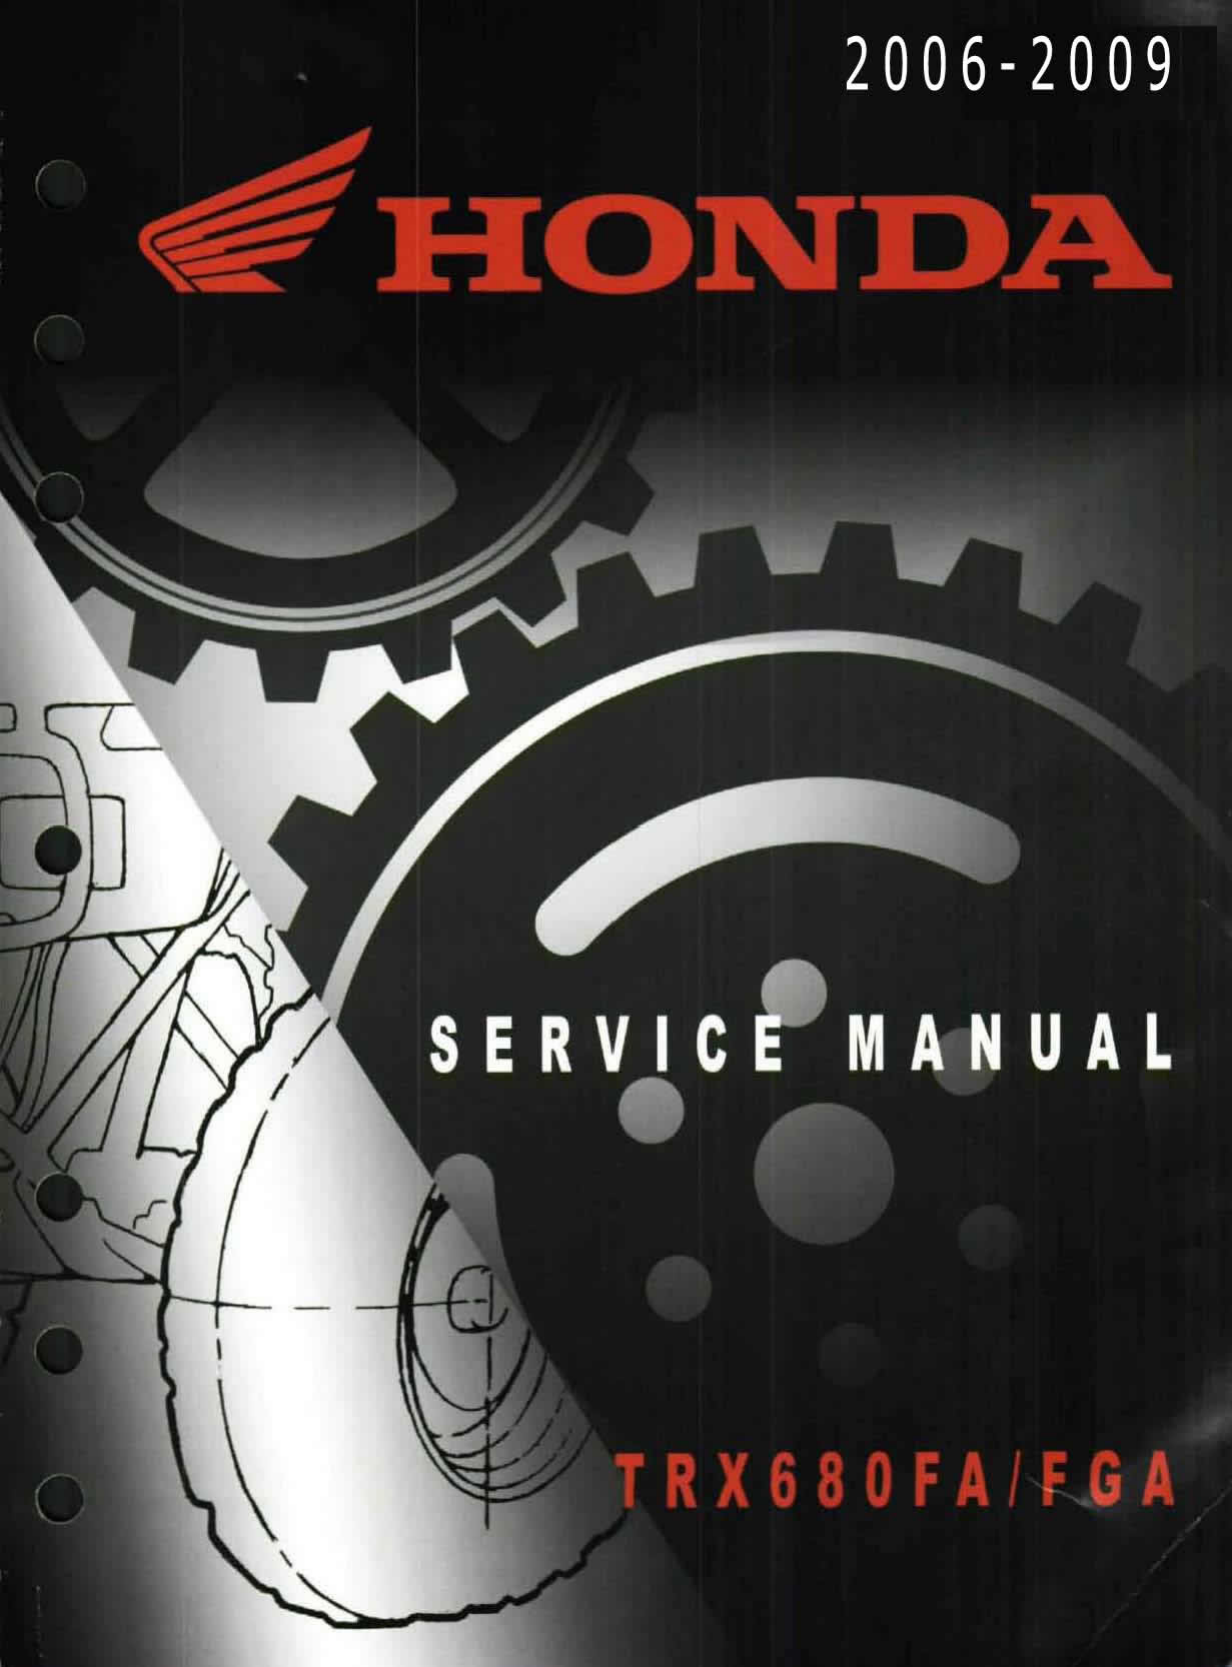 2006-2009 Honda Rincon TRX 680, TRX 680FA, TRX 680FGA repair and service manual Preview image 6